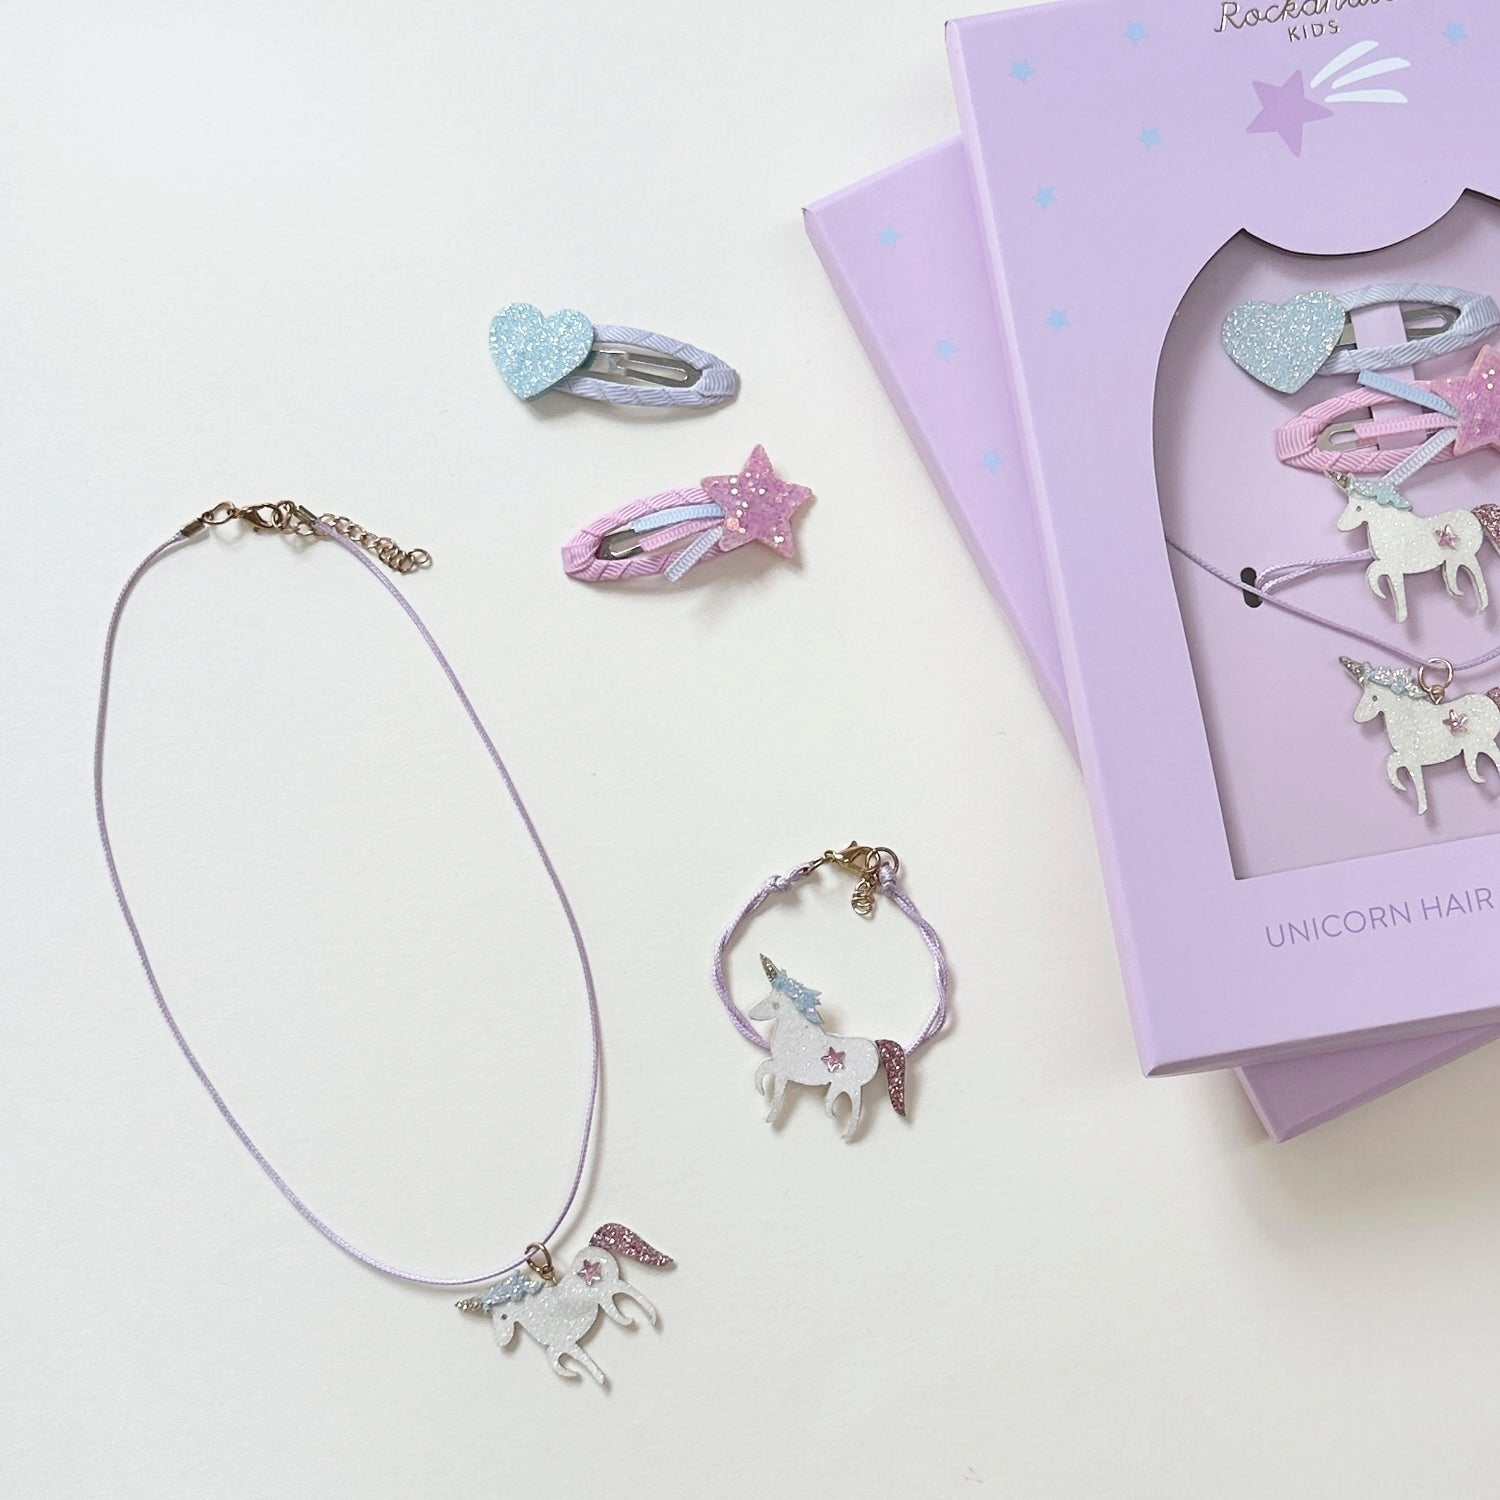 Rockahula - unicorn hair & jewellery set